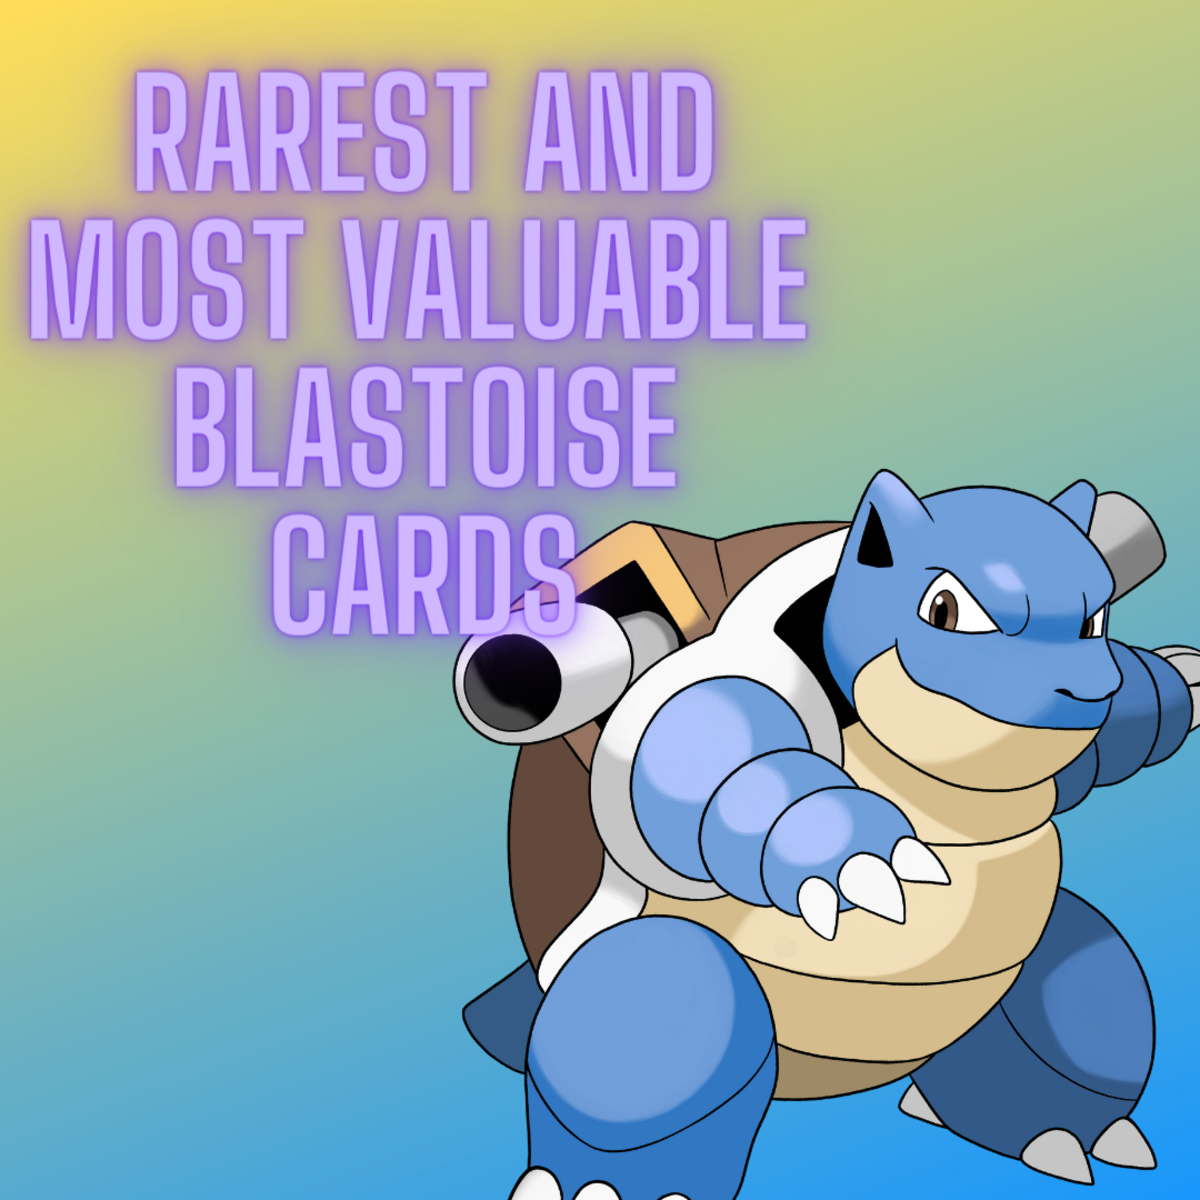 Pokémon TCG: 5 of the Rarest and Most Valuable Blastoise Cards